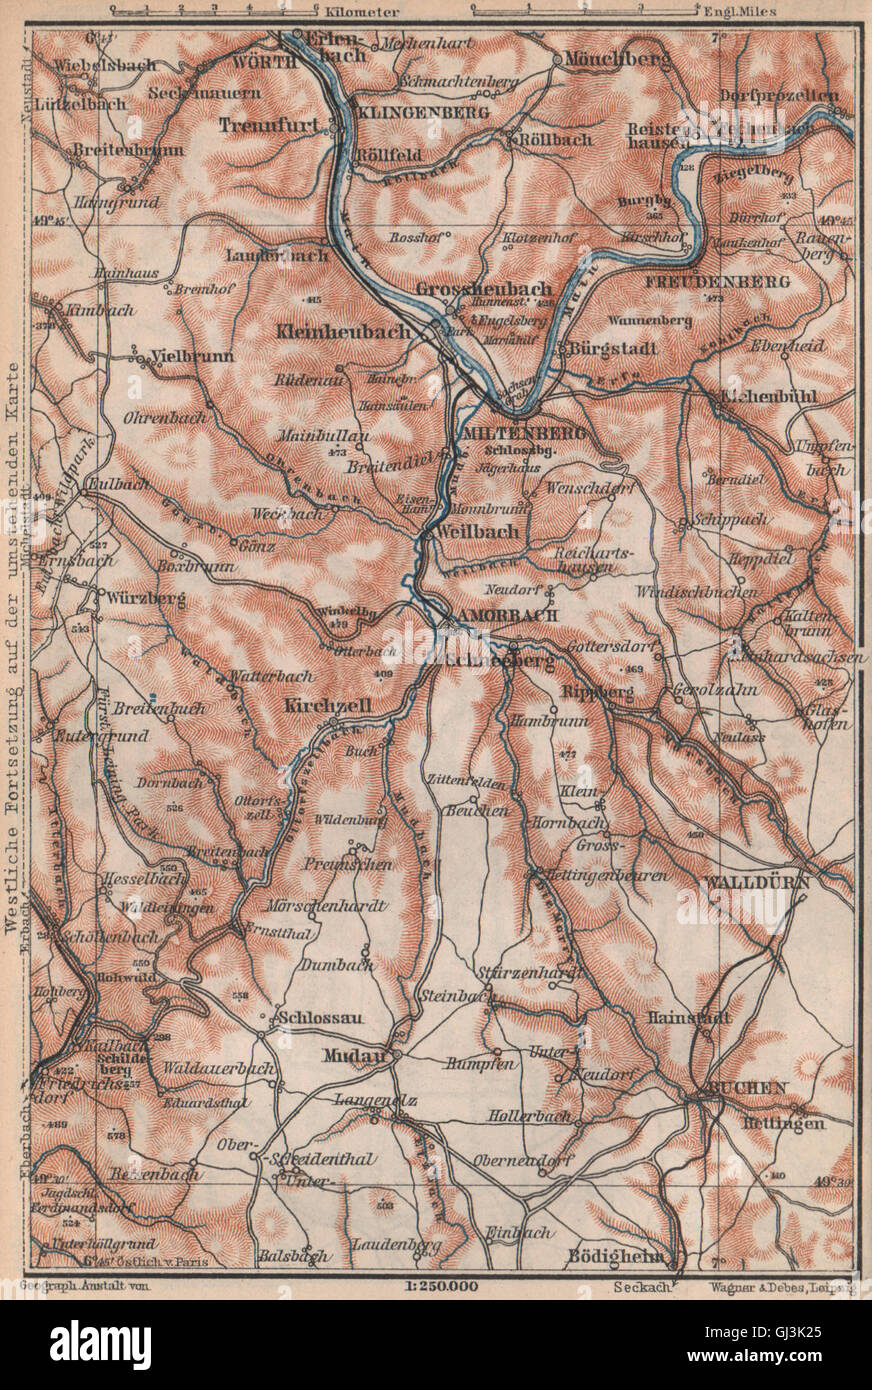 ÖST/EAST ODENWALD topo-map. Miltenberg Walldürn Klingenburg. Germany, 1892 Stock Photo